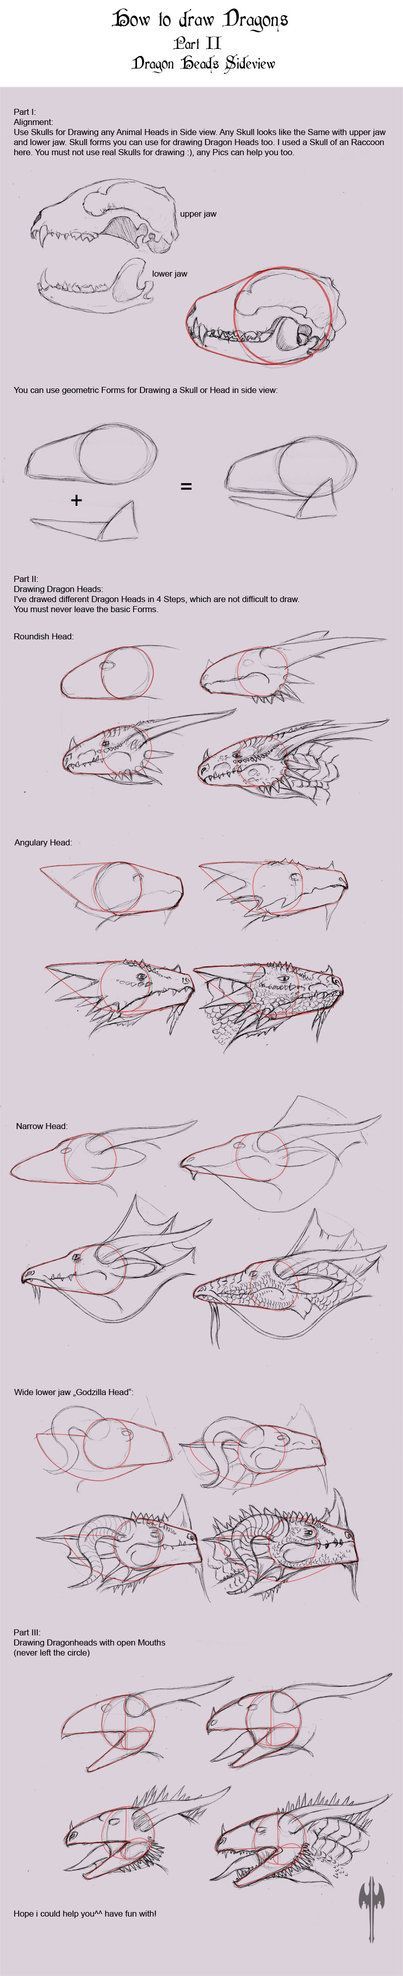 How to Draw Dragons II by ~Tarjcia on deviantART